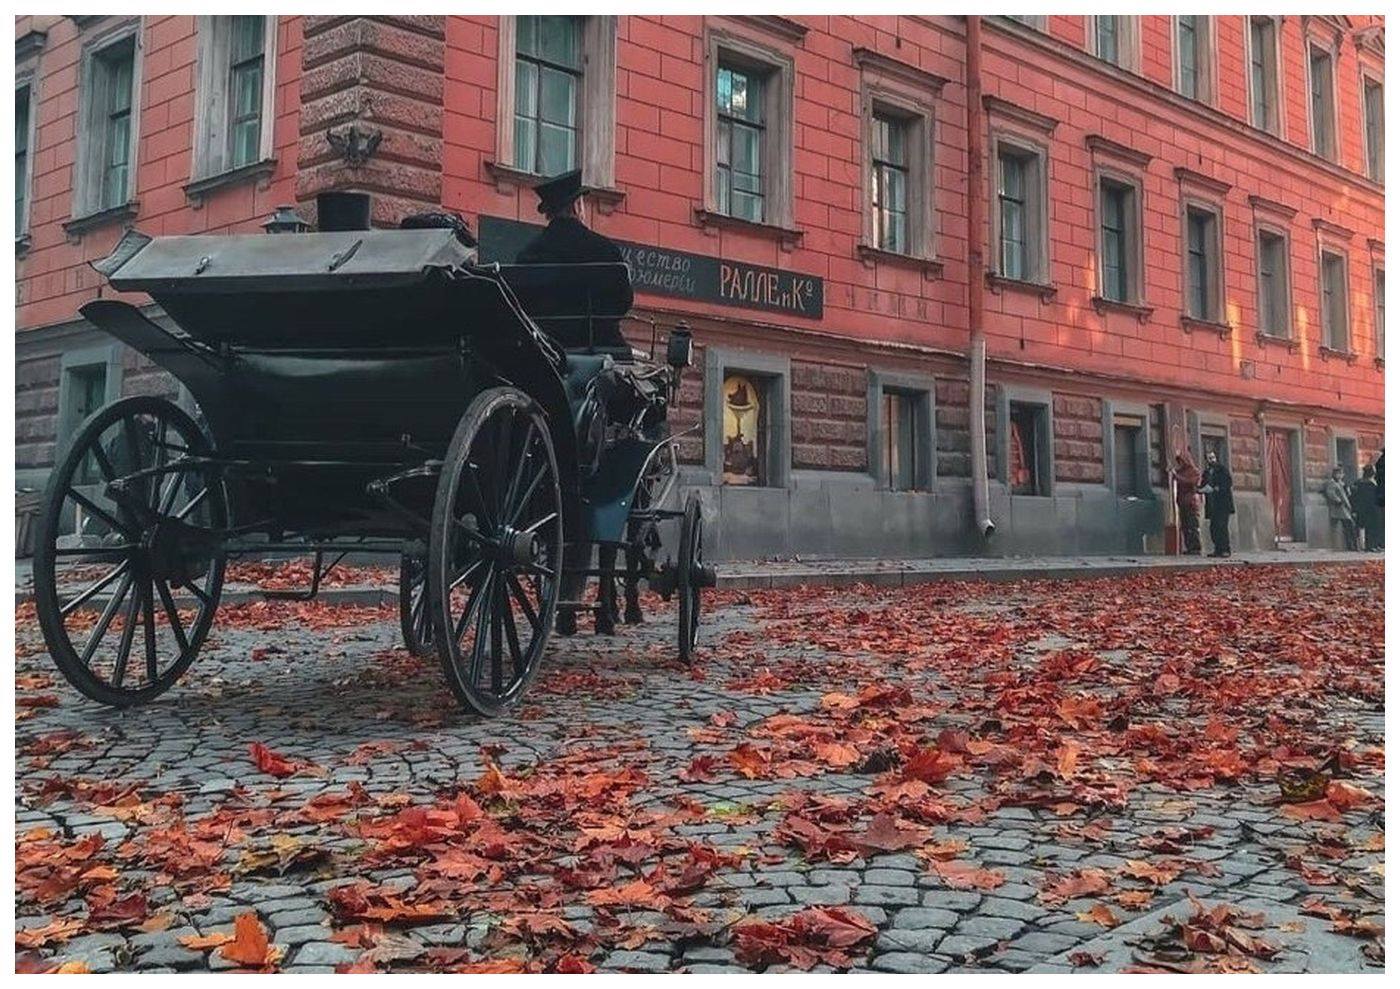 Autumn in St. Petersburg